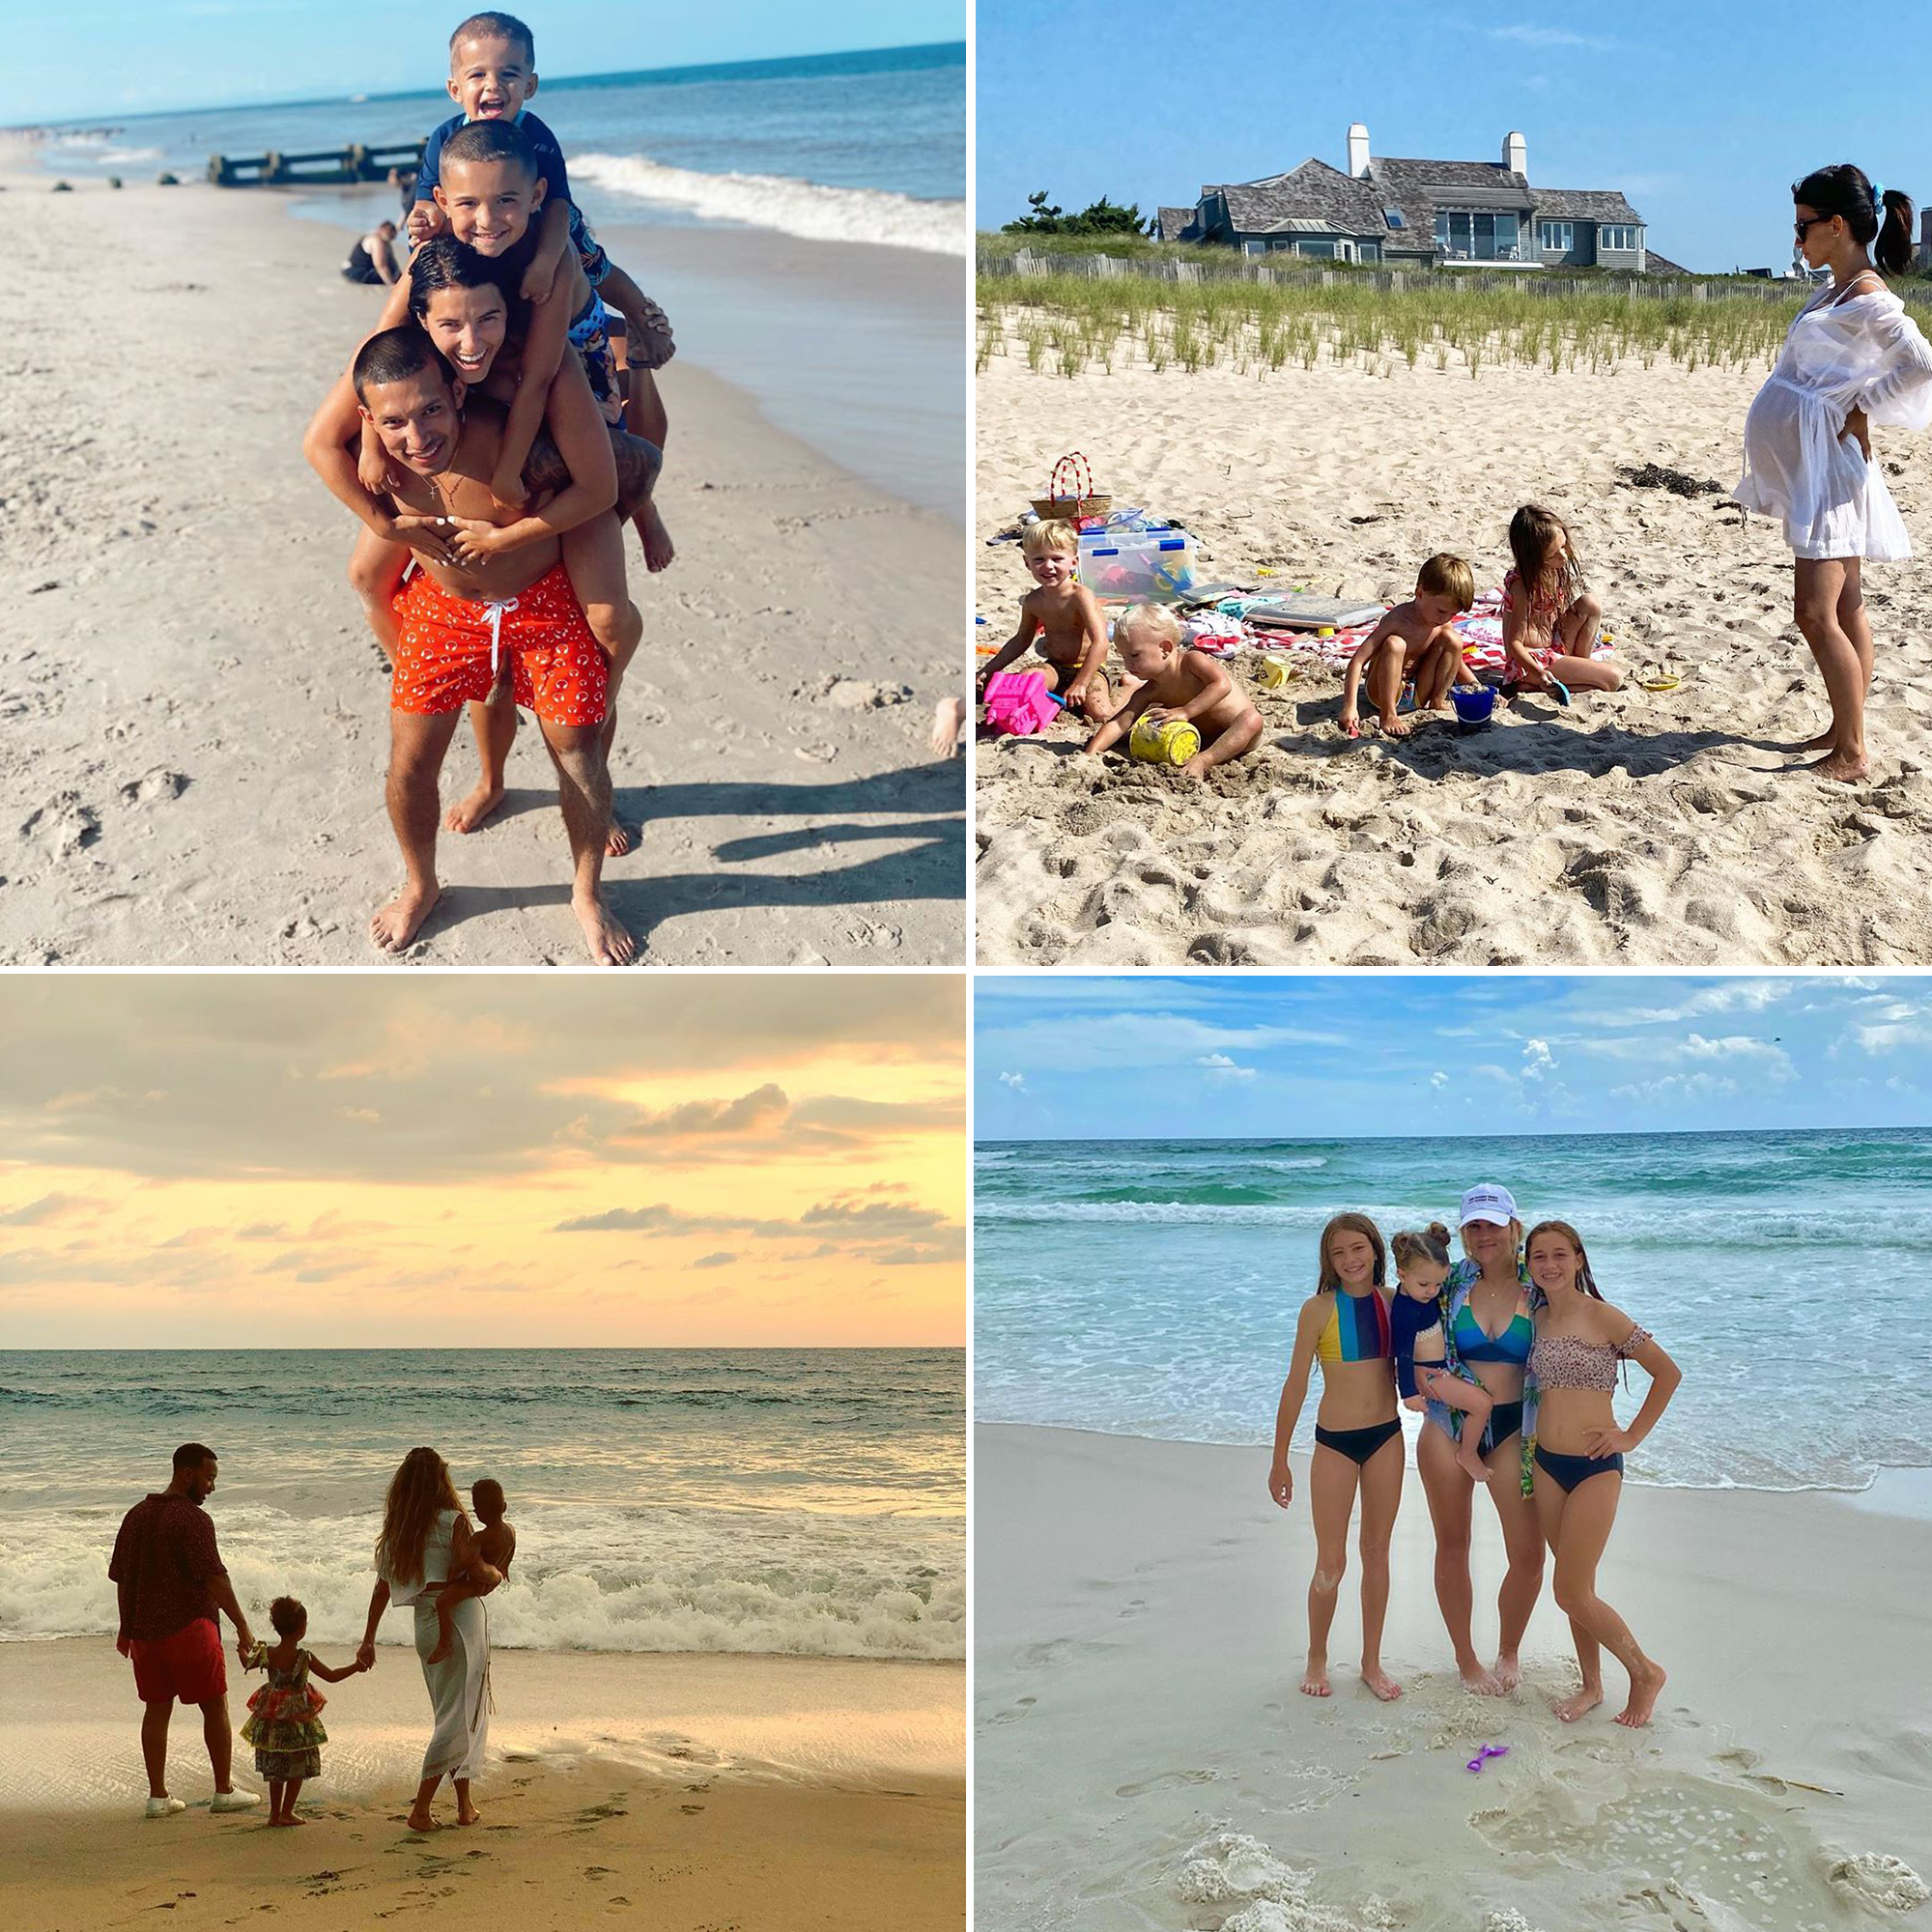 Nudism Penis - Celeb Families' Beach Trips Amid Coronavirus Pandemic: Pics